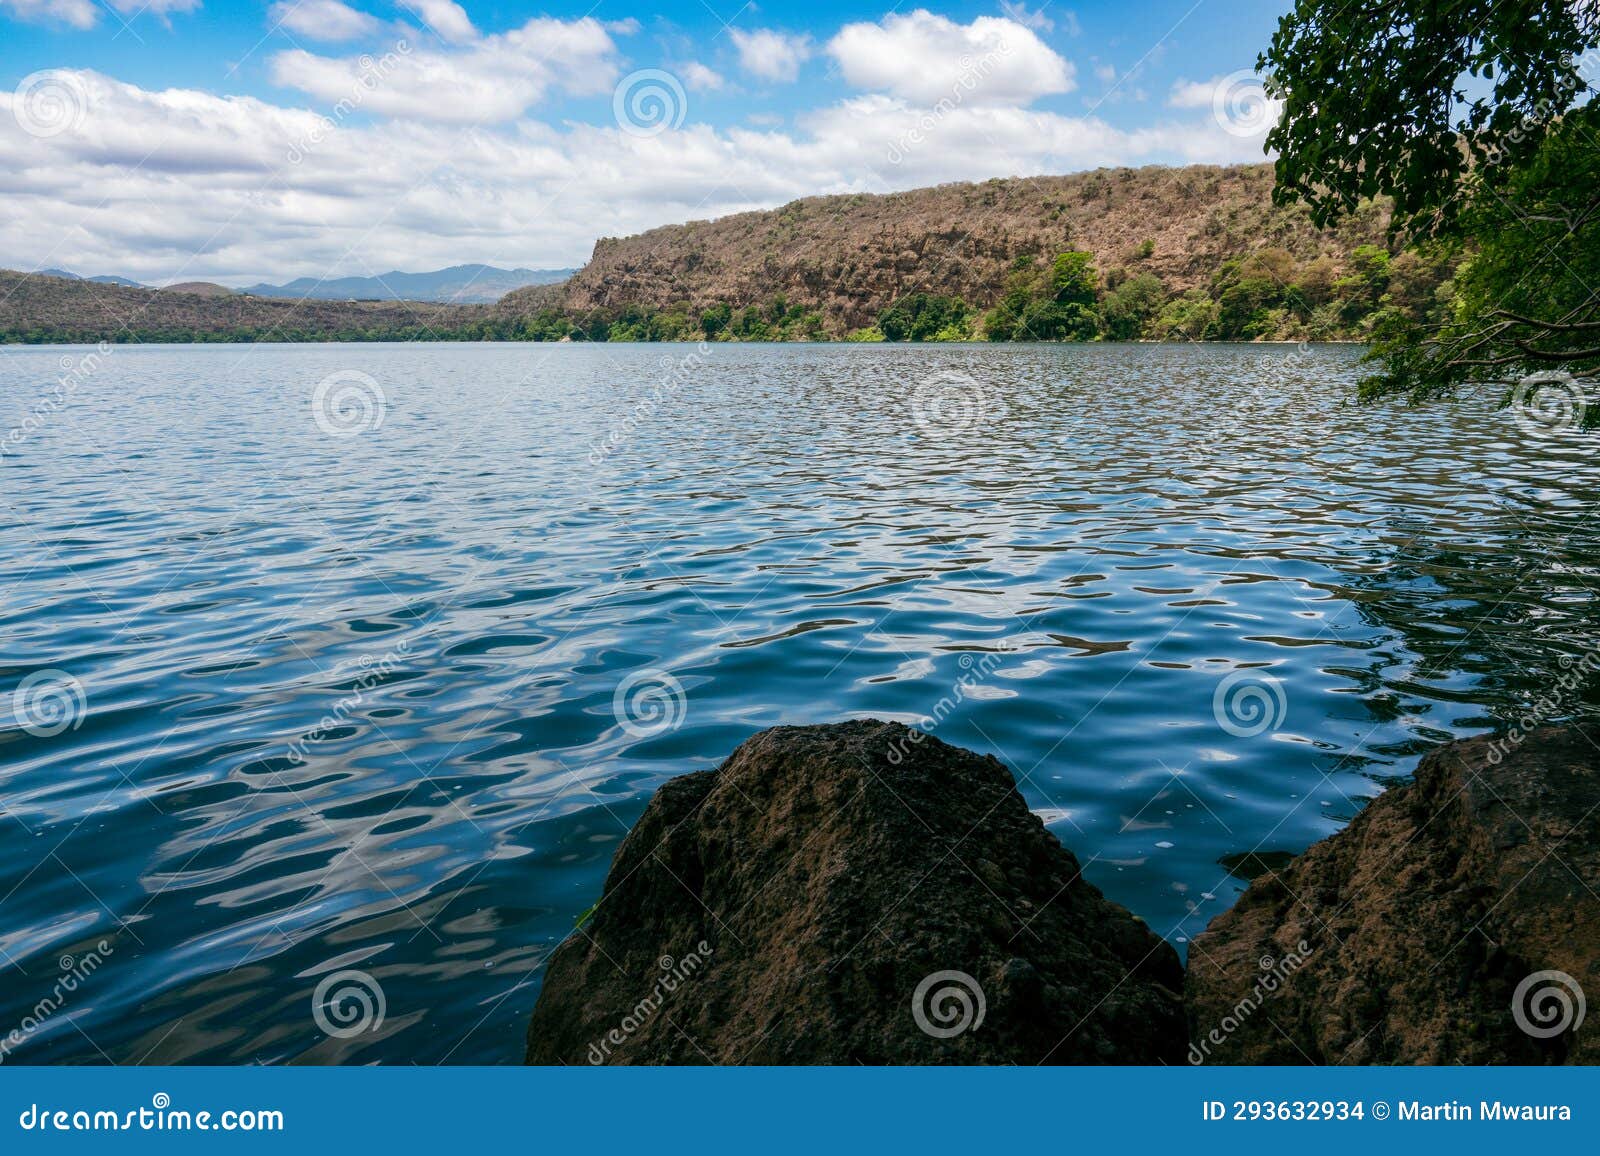 scenic view of lake chala in kenya/tanzania border